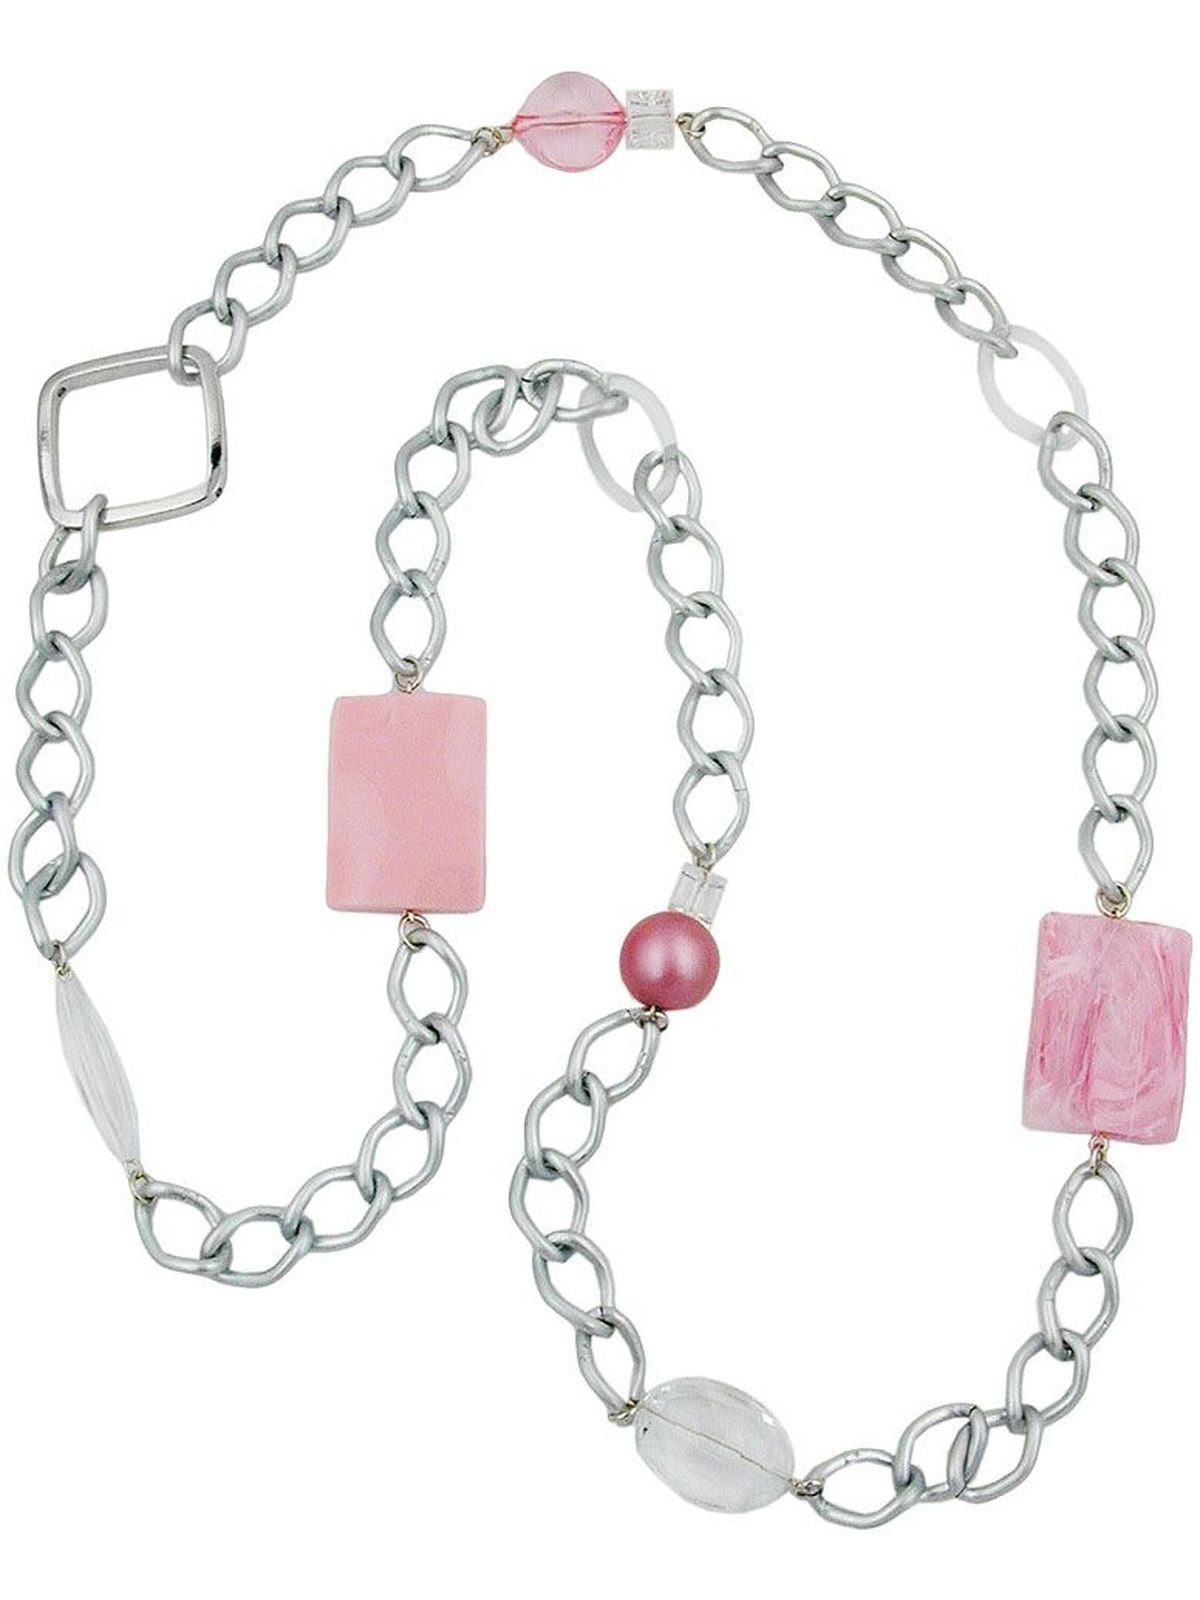 Gallay Perlenkette Kunststoffperlen rosa transparent Weitpanzerkette hellgrau 95cm Aluminium